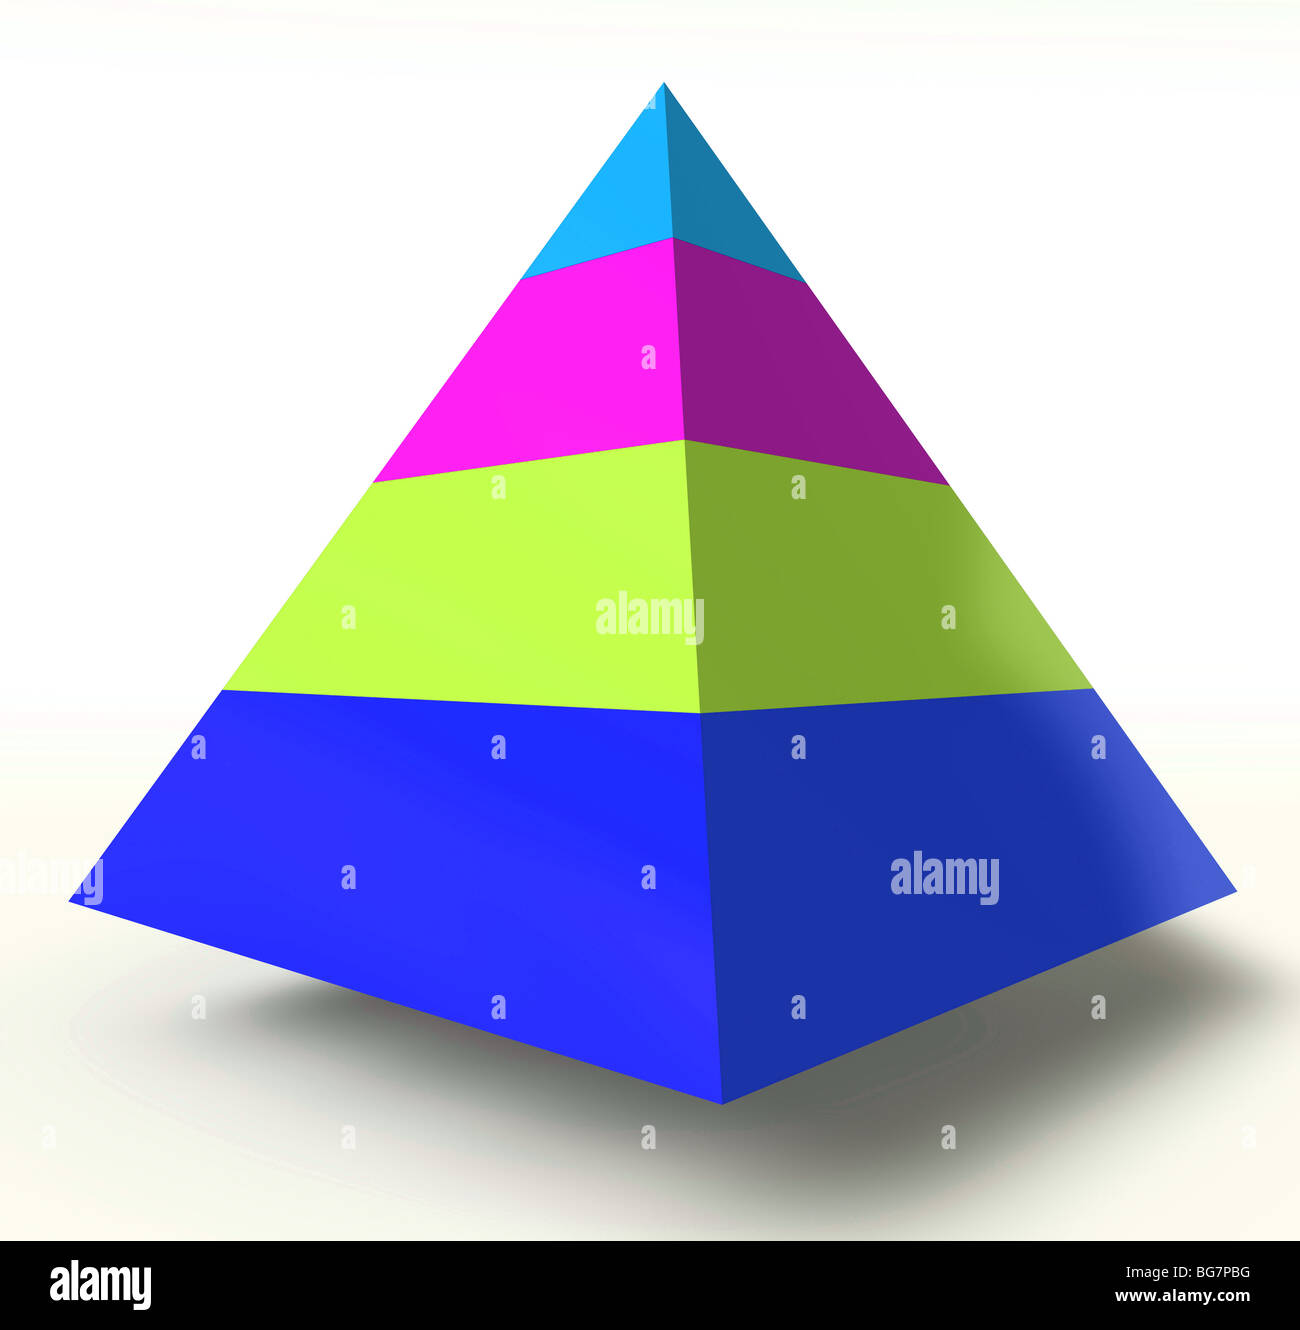 Mehrschichtige Hierarchie Pyramide Illustration, 3d farbig Stockfoto